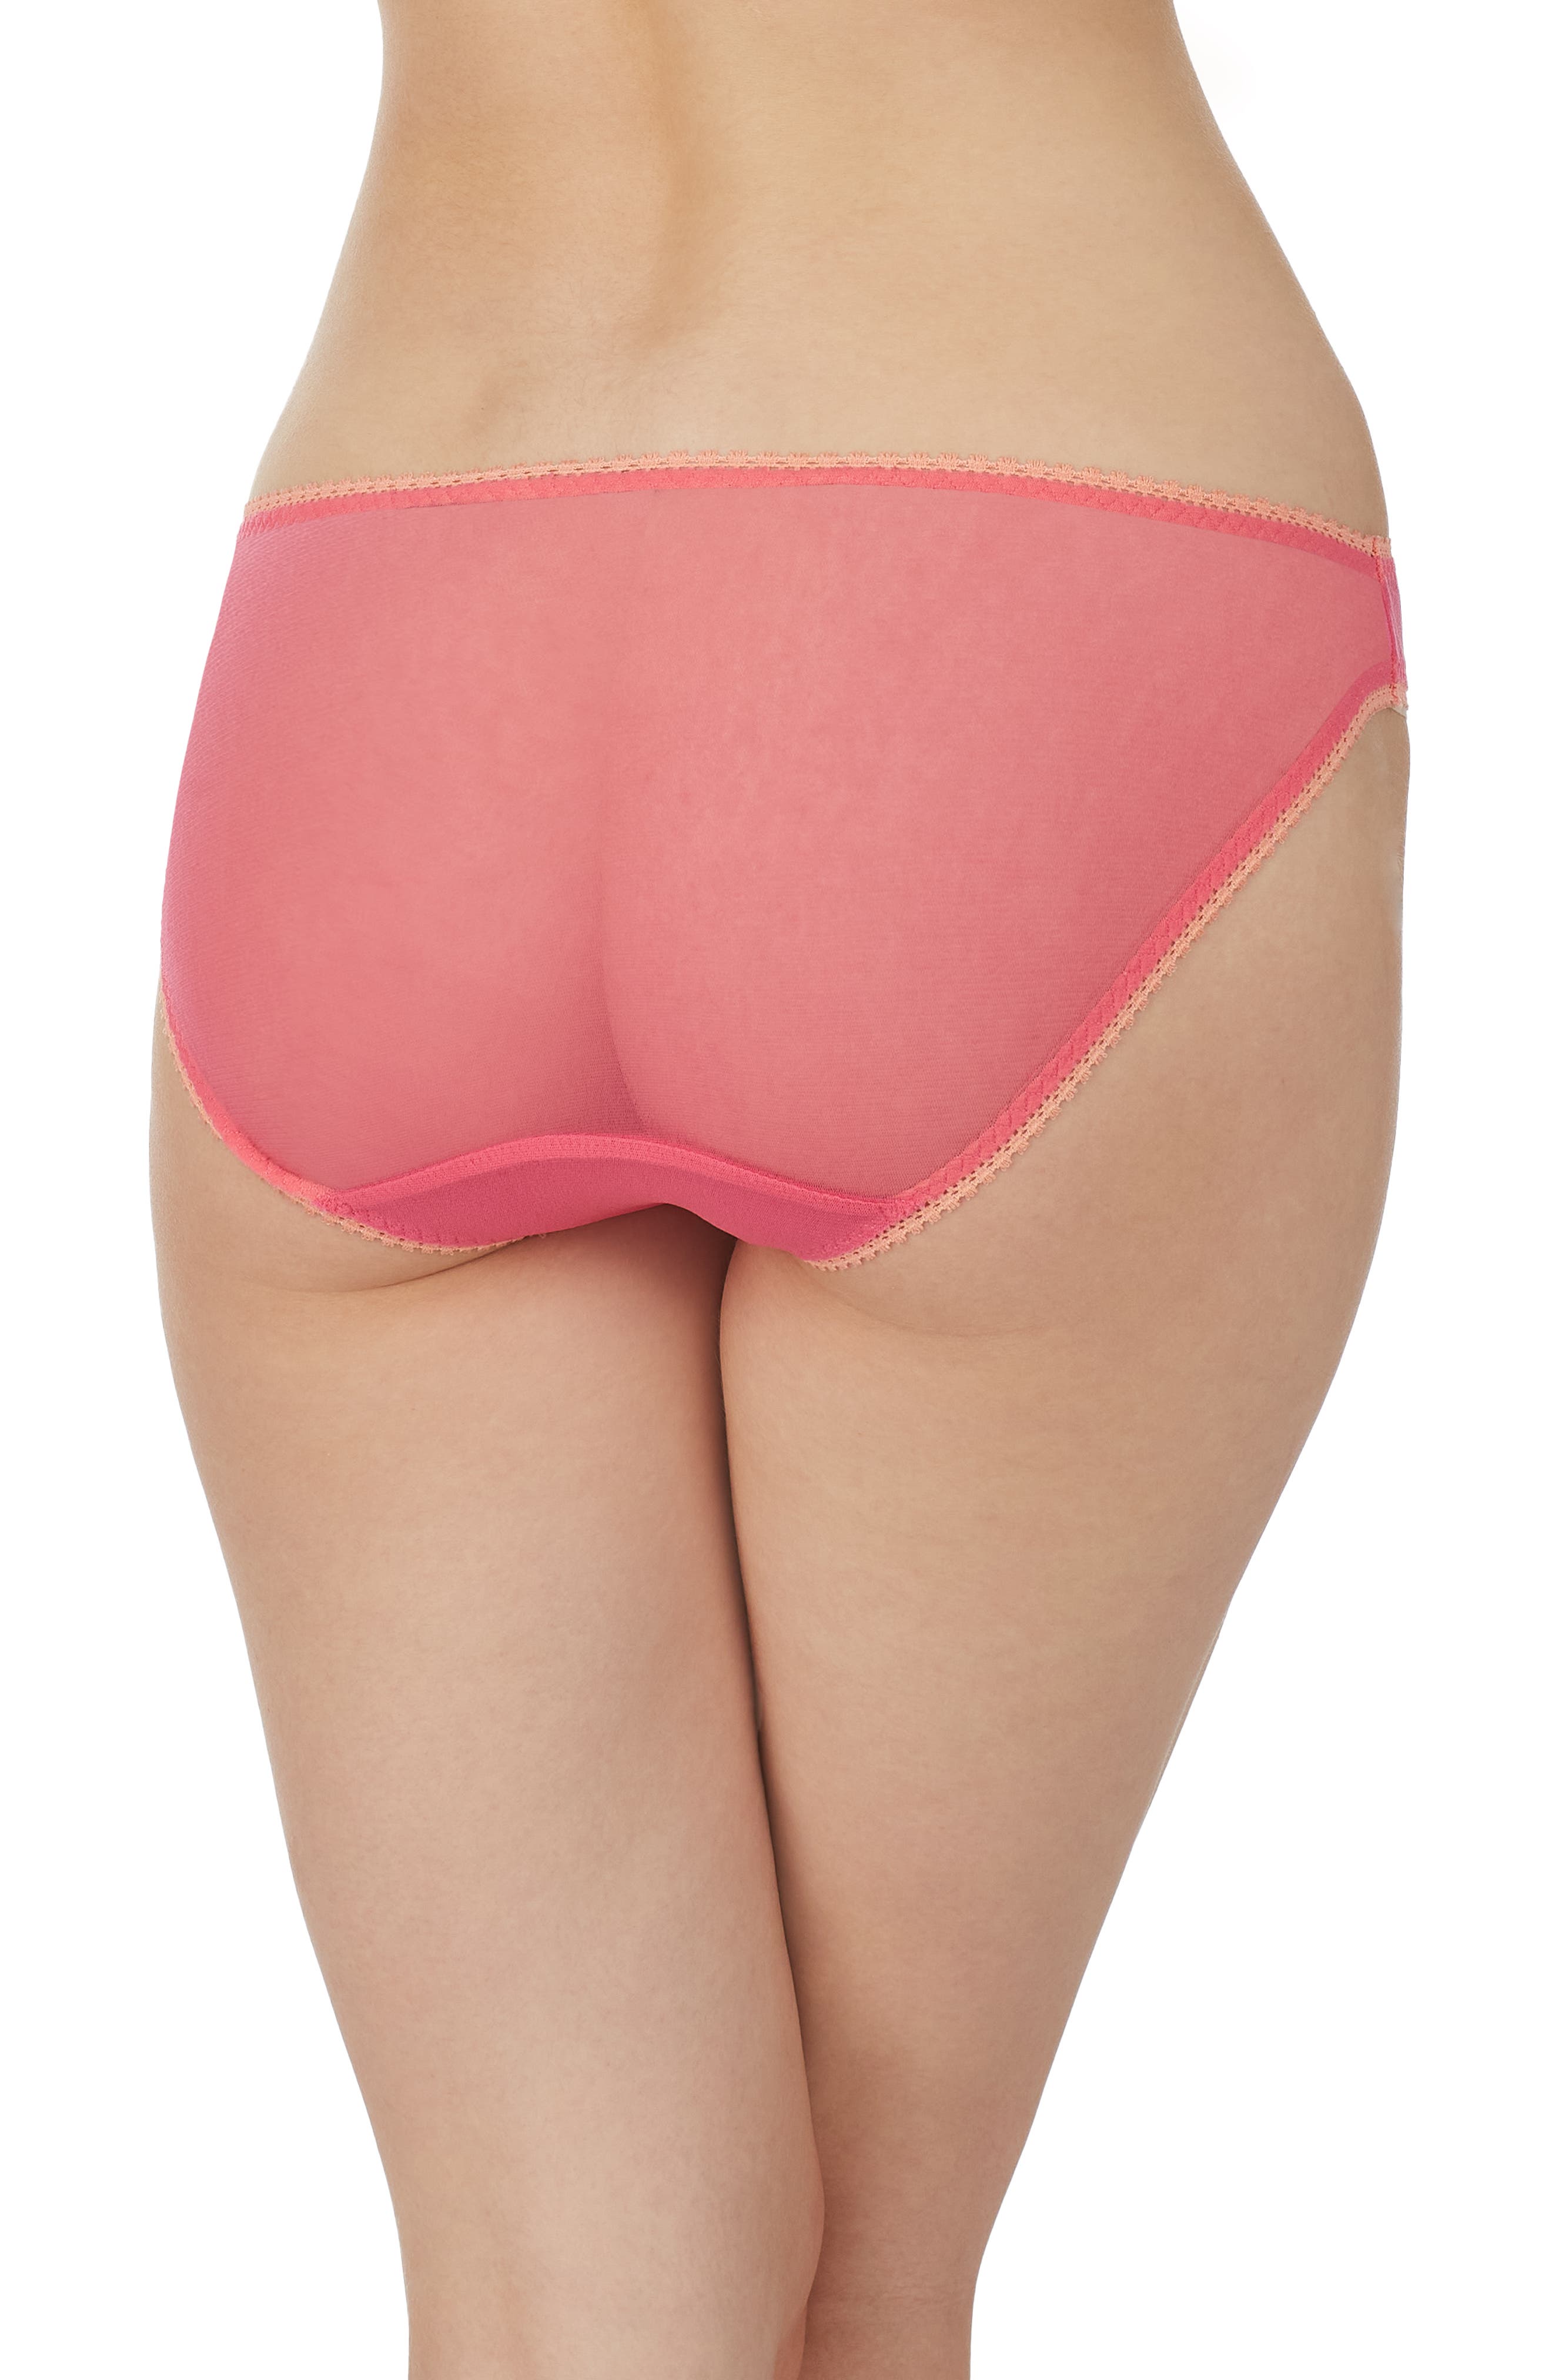 Topshop Pink size 16 mesh bikini briefs knickers panties hot pink